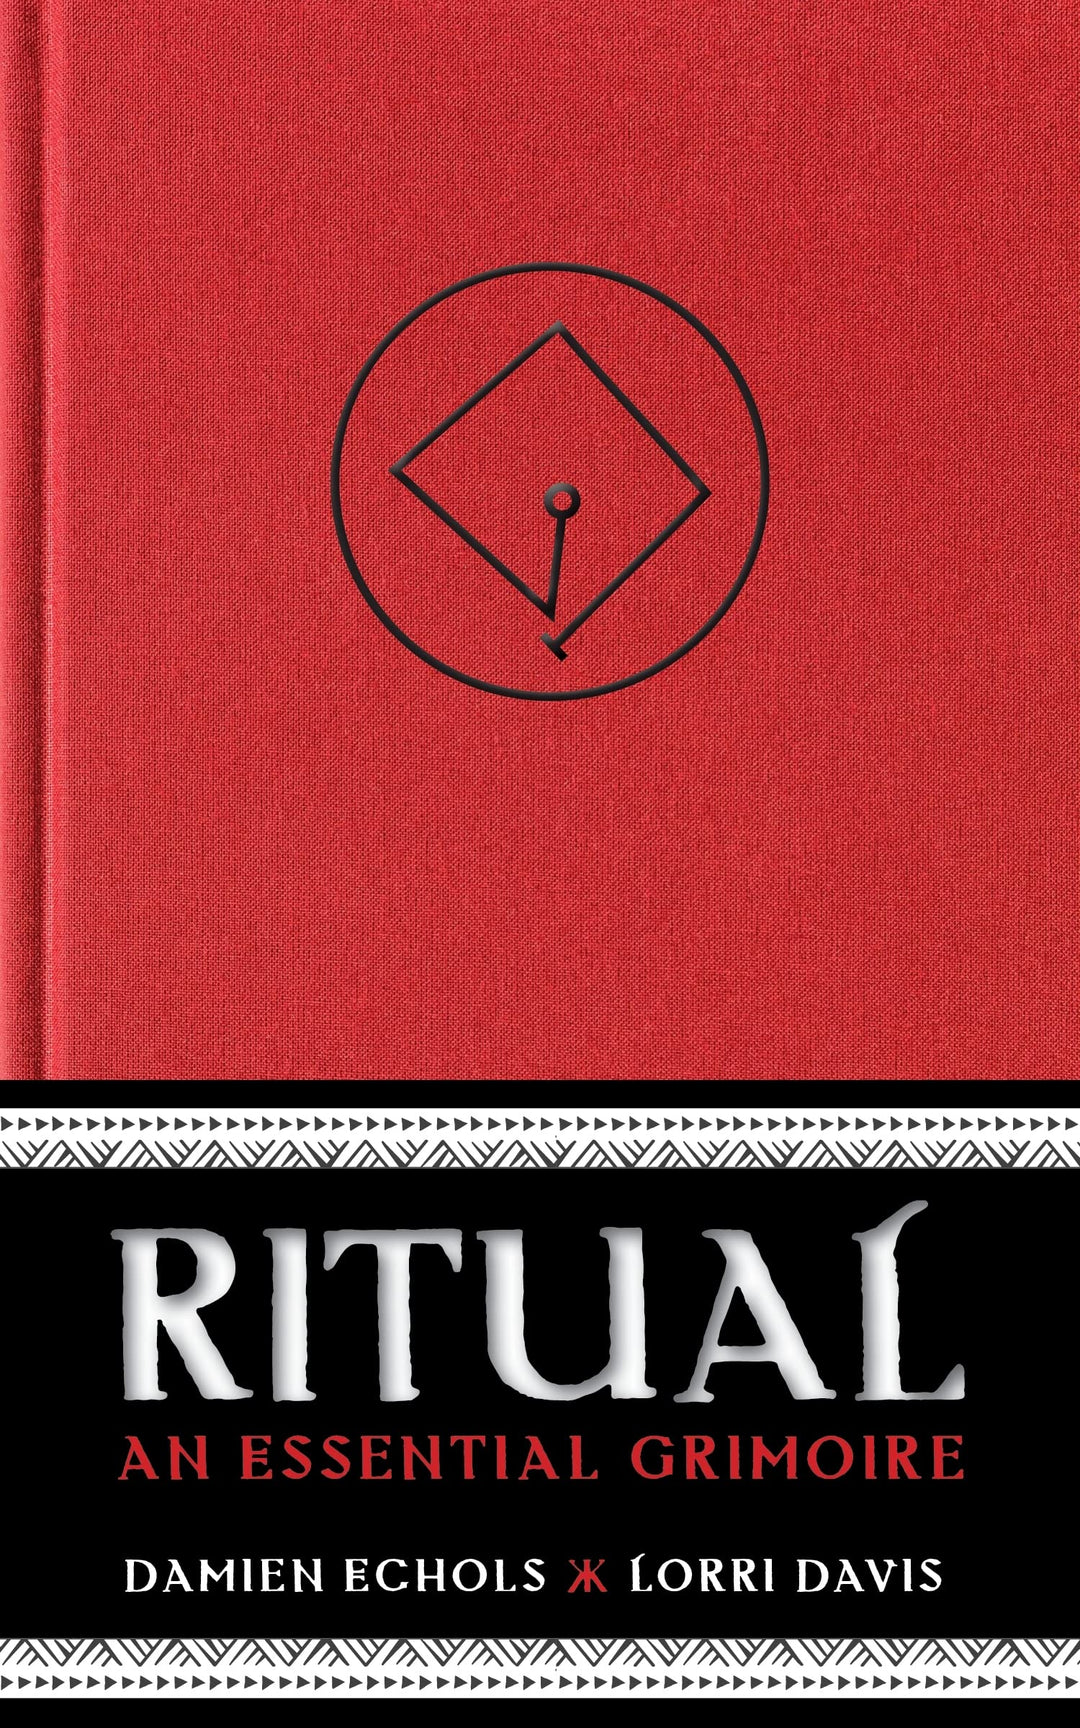 Ritual: An Essential Grimoire by Damien Echols